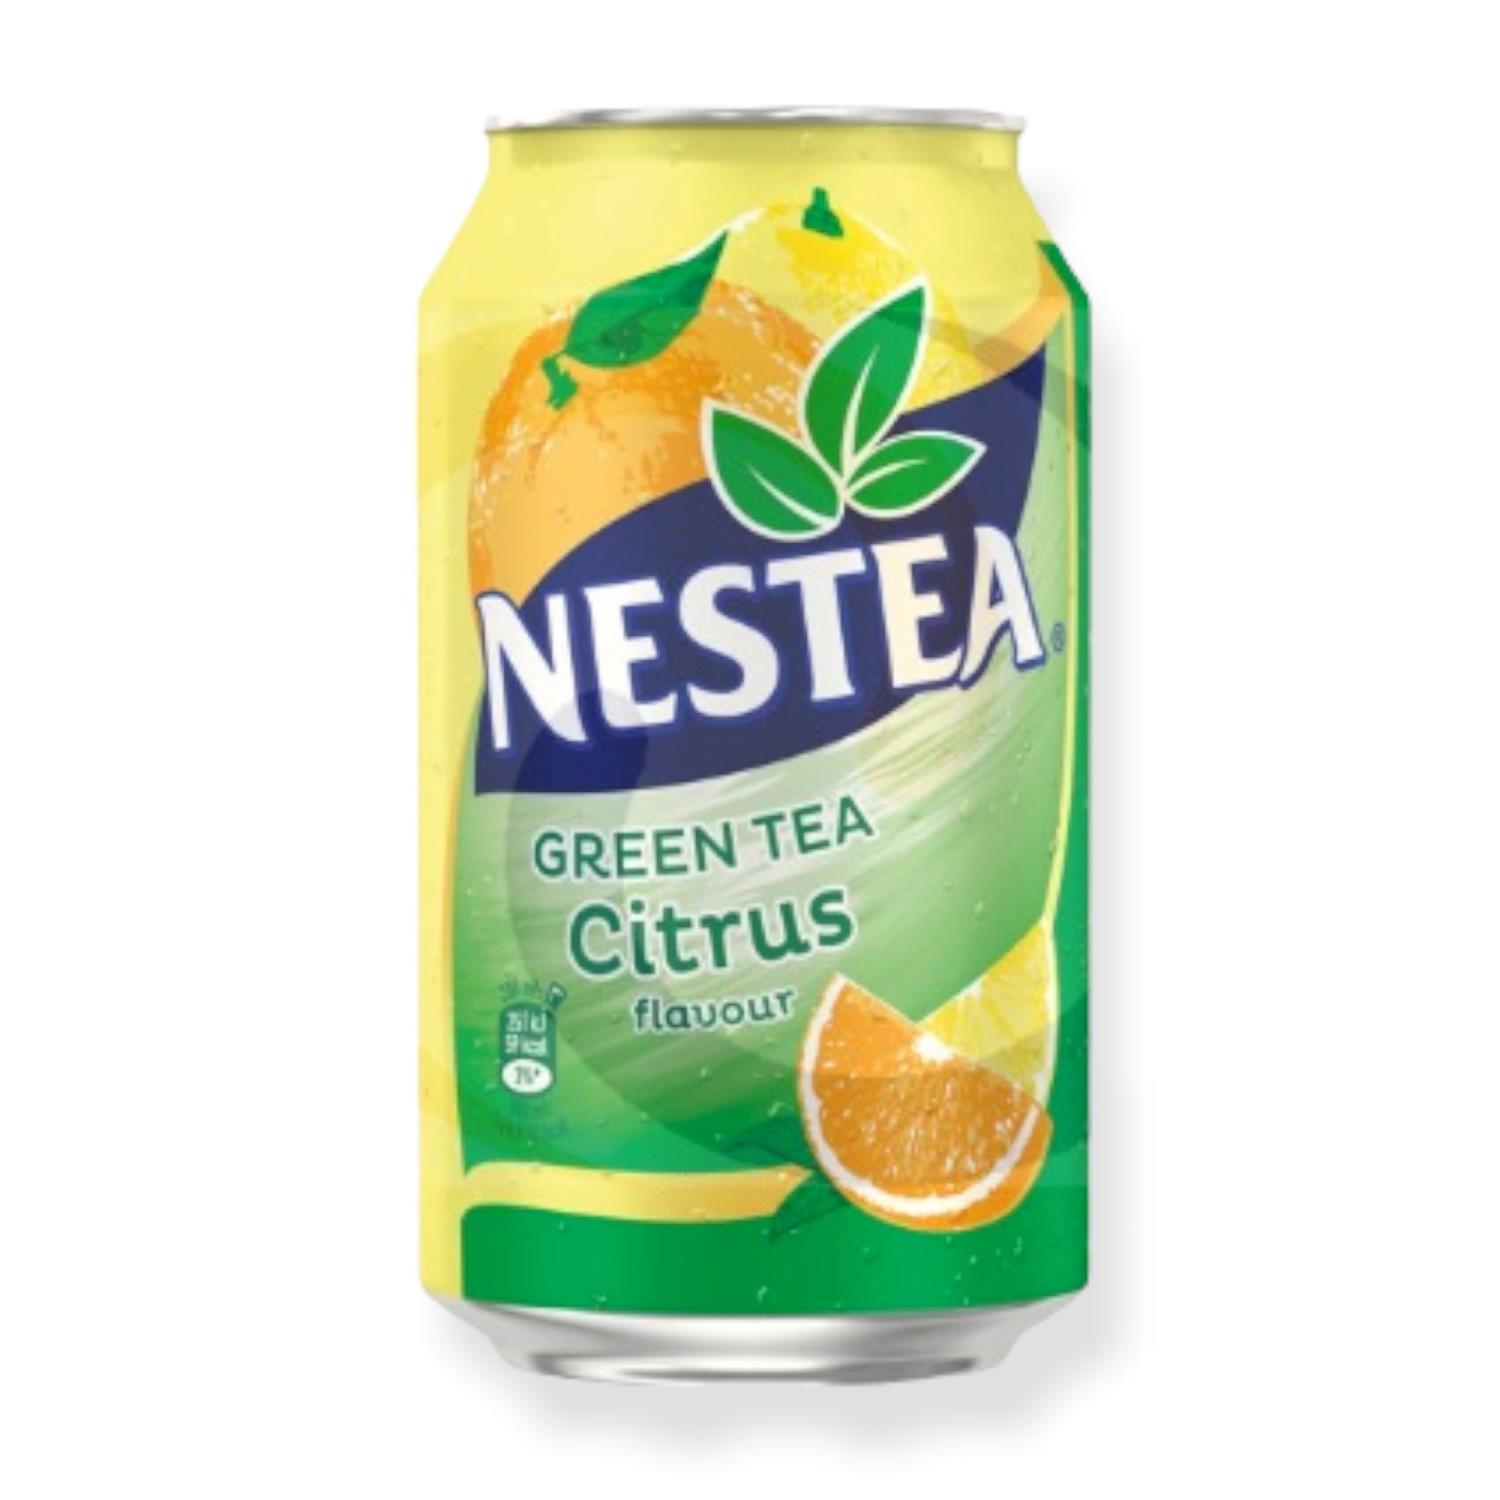 Nestea Green Tea Citrus 330ml